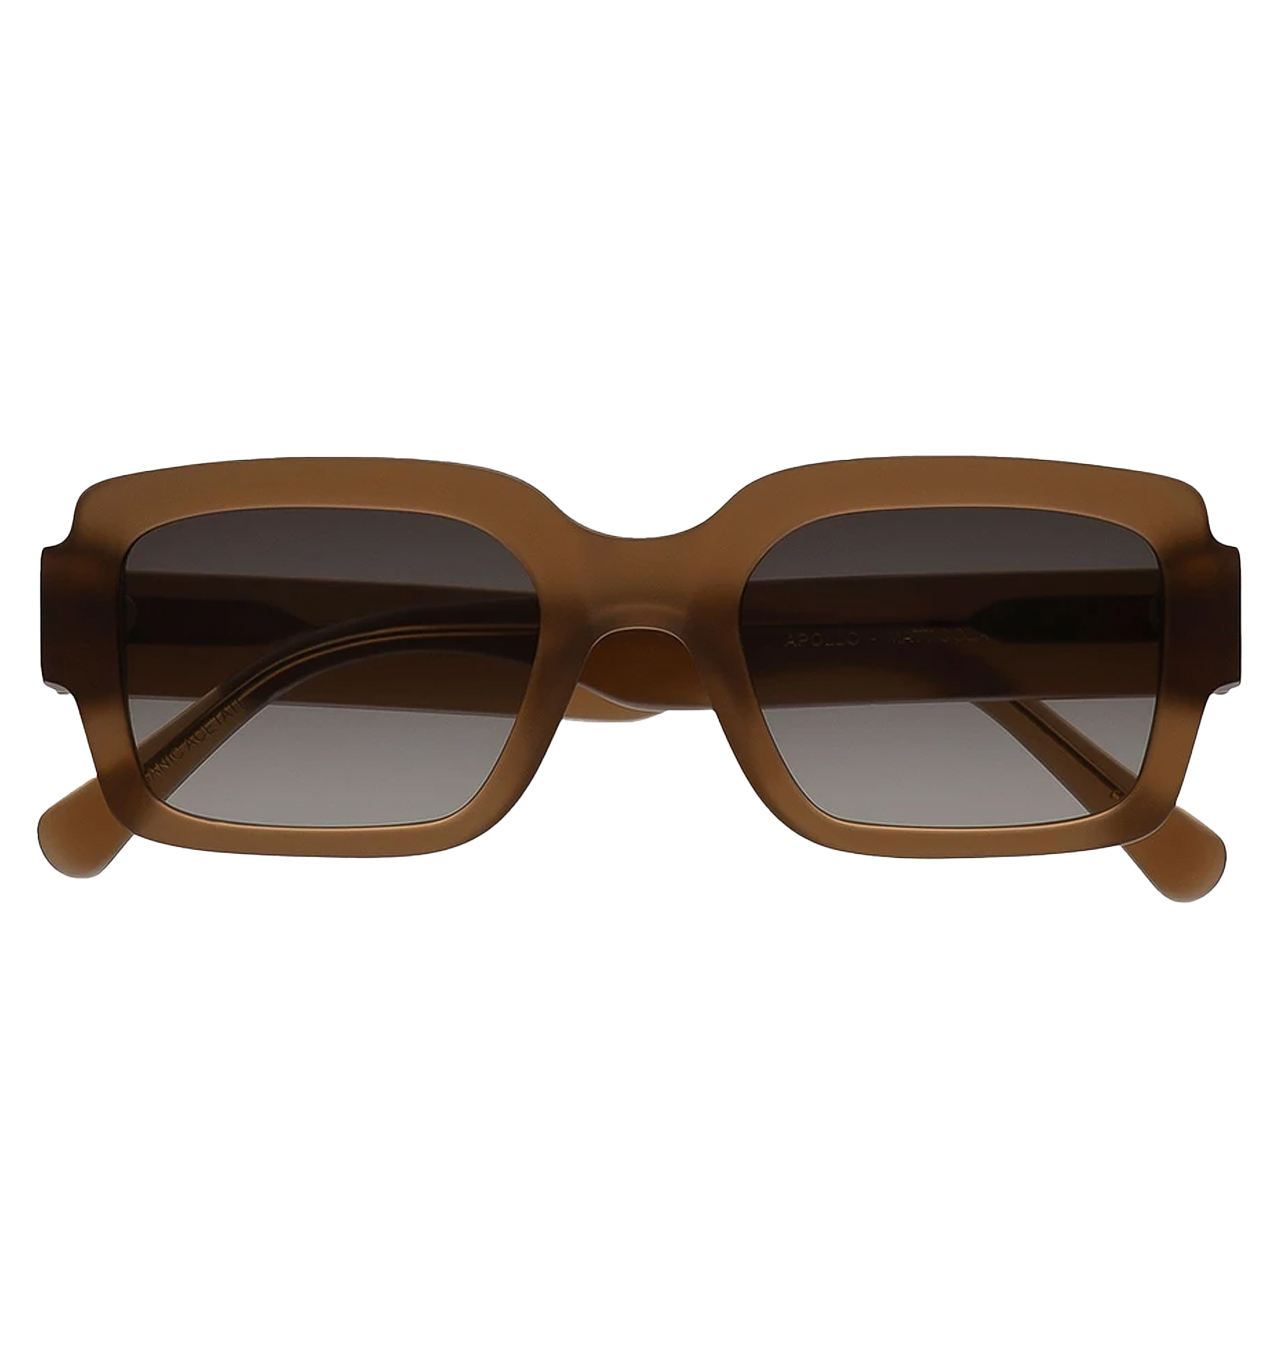 Monokel Eyewear - Apollo Matte Cola Sunglasses - Grey Gradient Lens